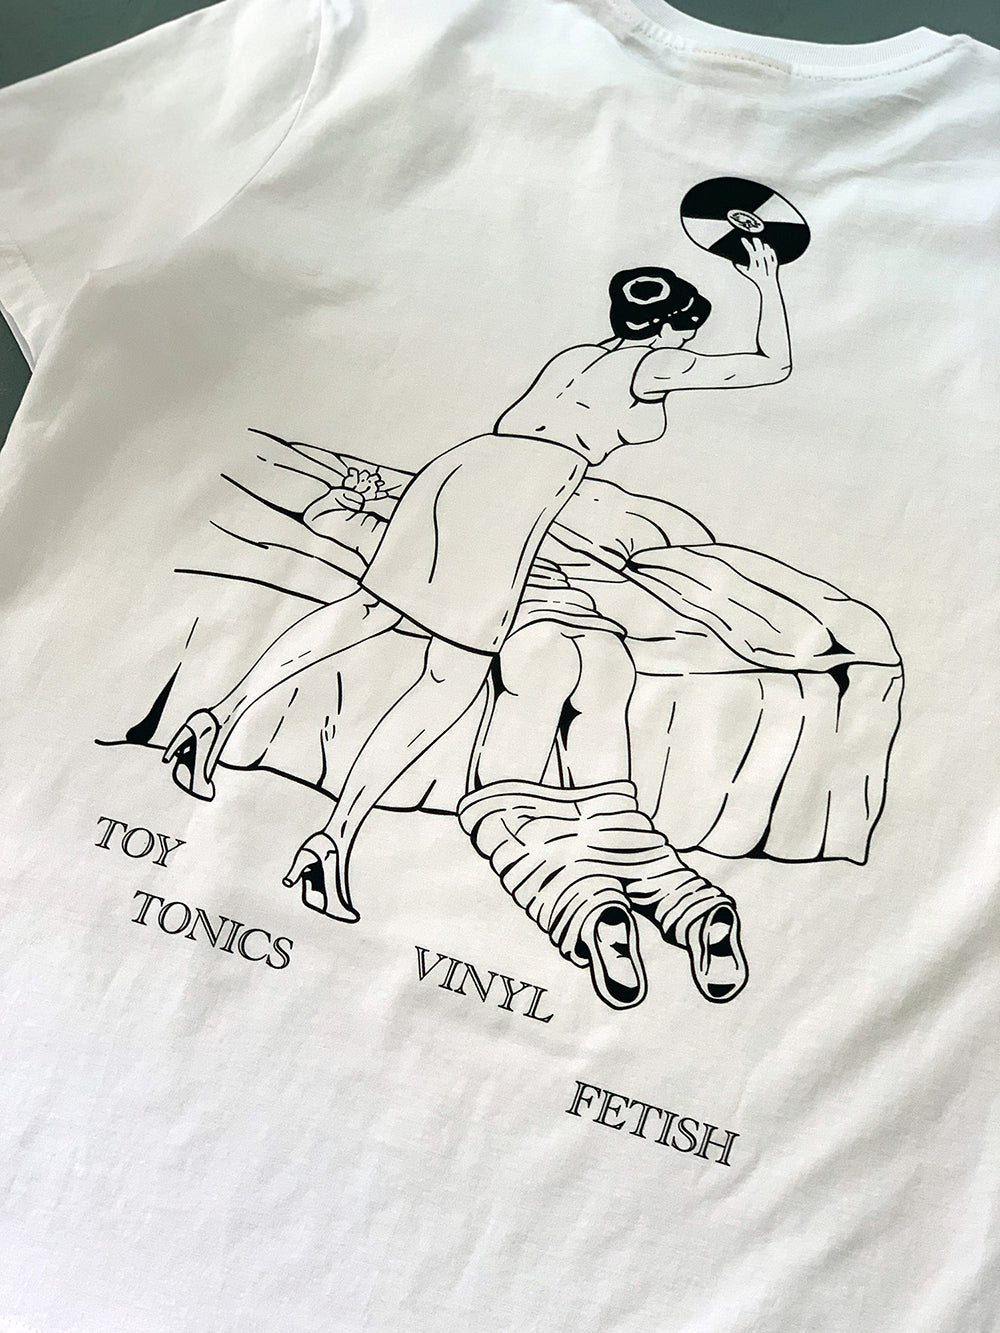 Toy Tonics Vinyl Fetish T-Shirt - Limited to 150